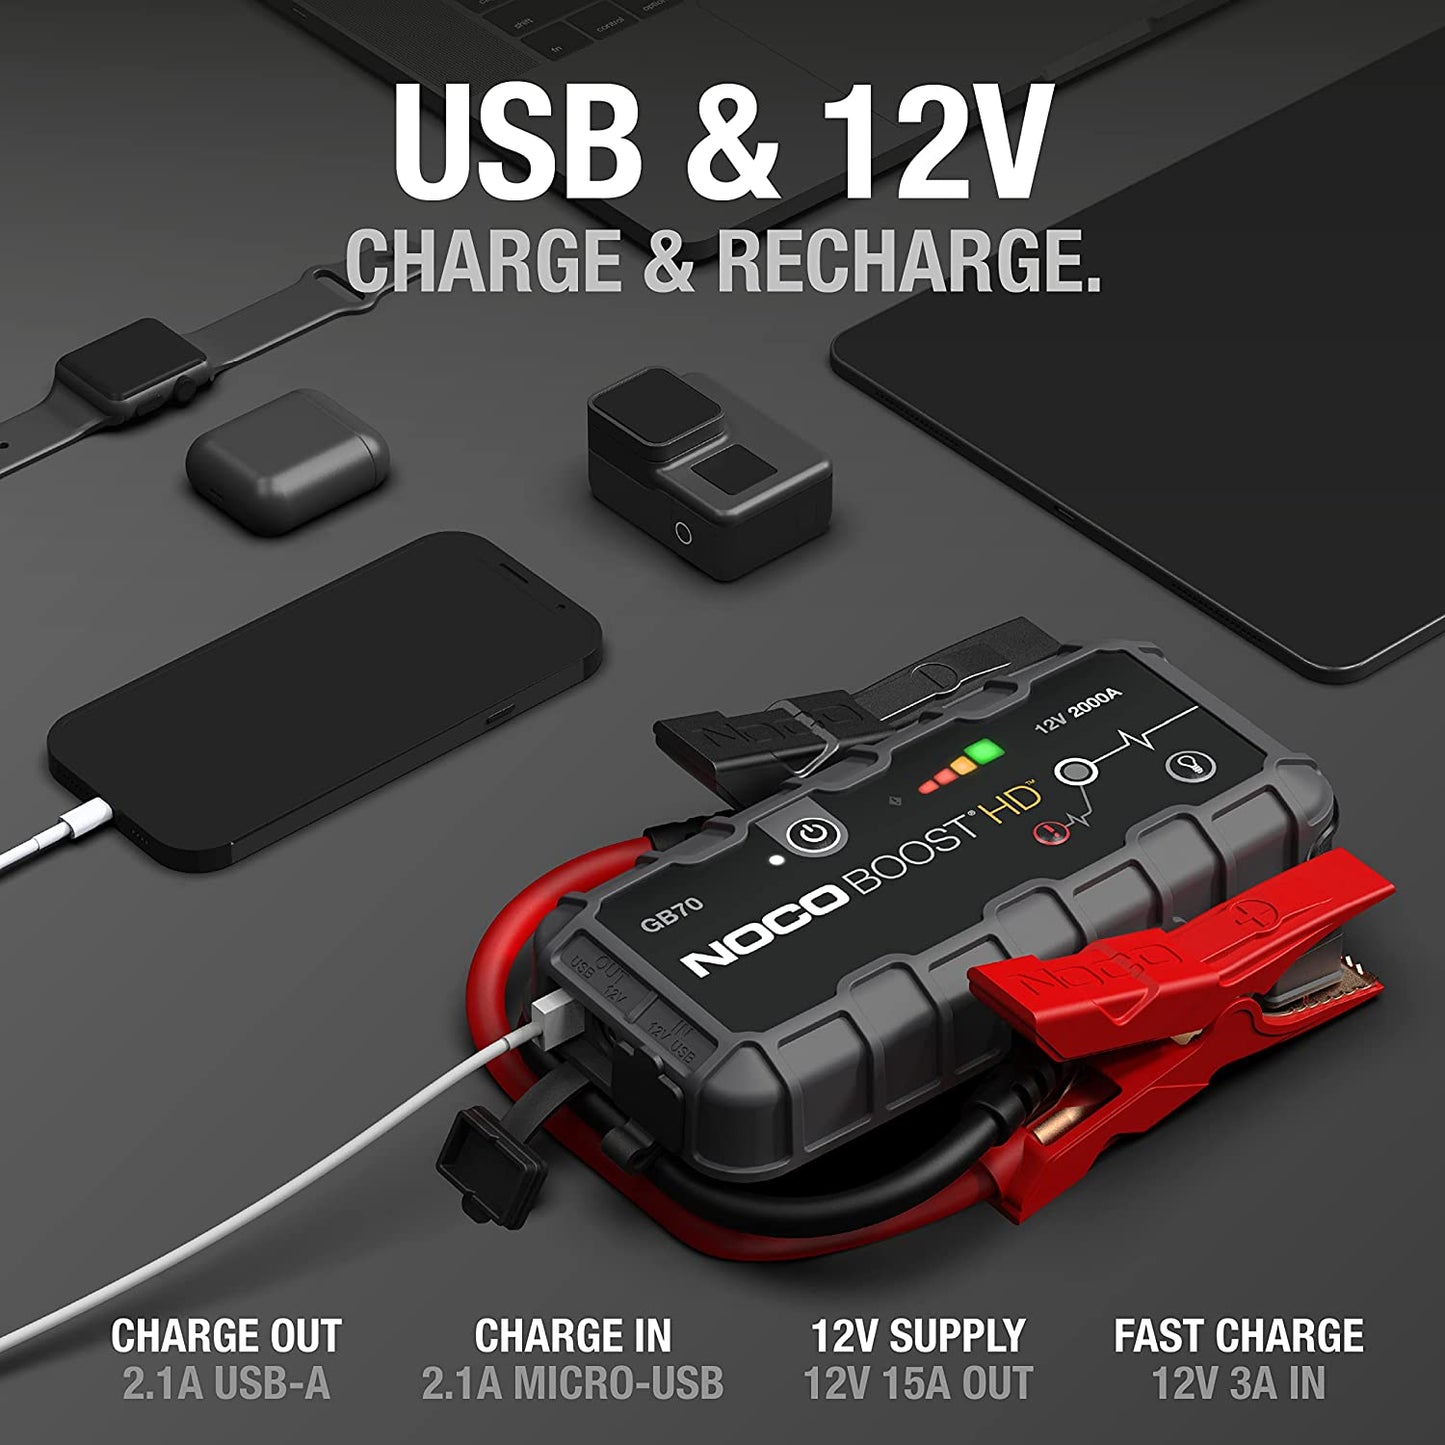 NOCO Boost HD GB70 2000A 12V UltraSafe Lithium Jump Starter Box, Car Battery Booster, Jump Start Pack